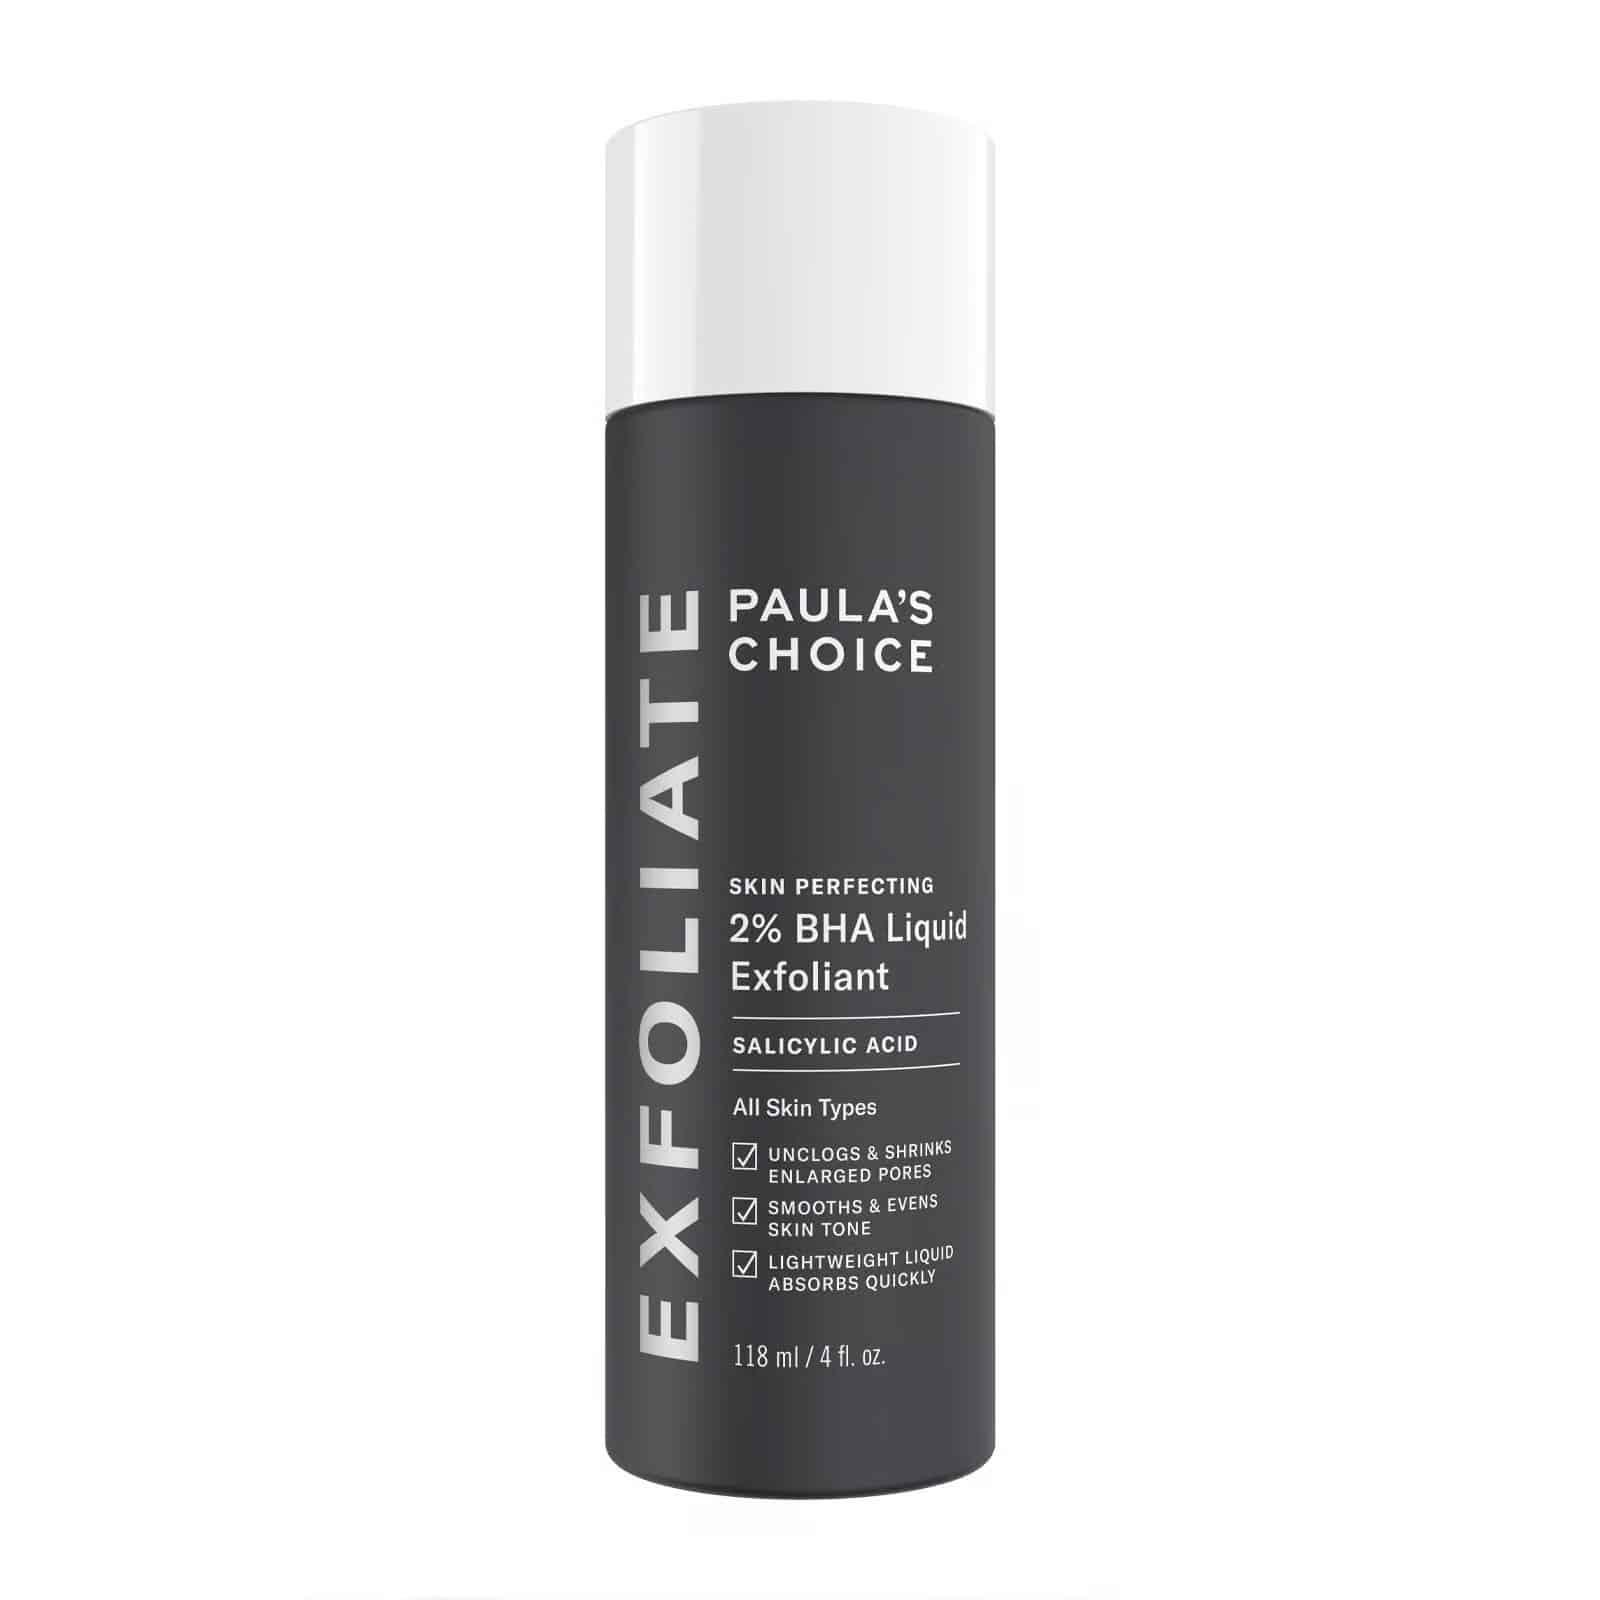 Paula’s Choice Skin Perfecting 2% BHA Liquid Exfoliator Discounts and Cashback